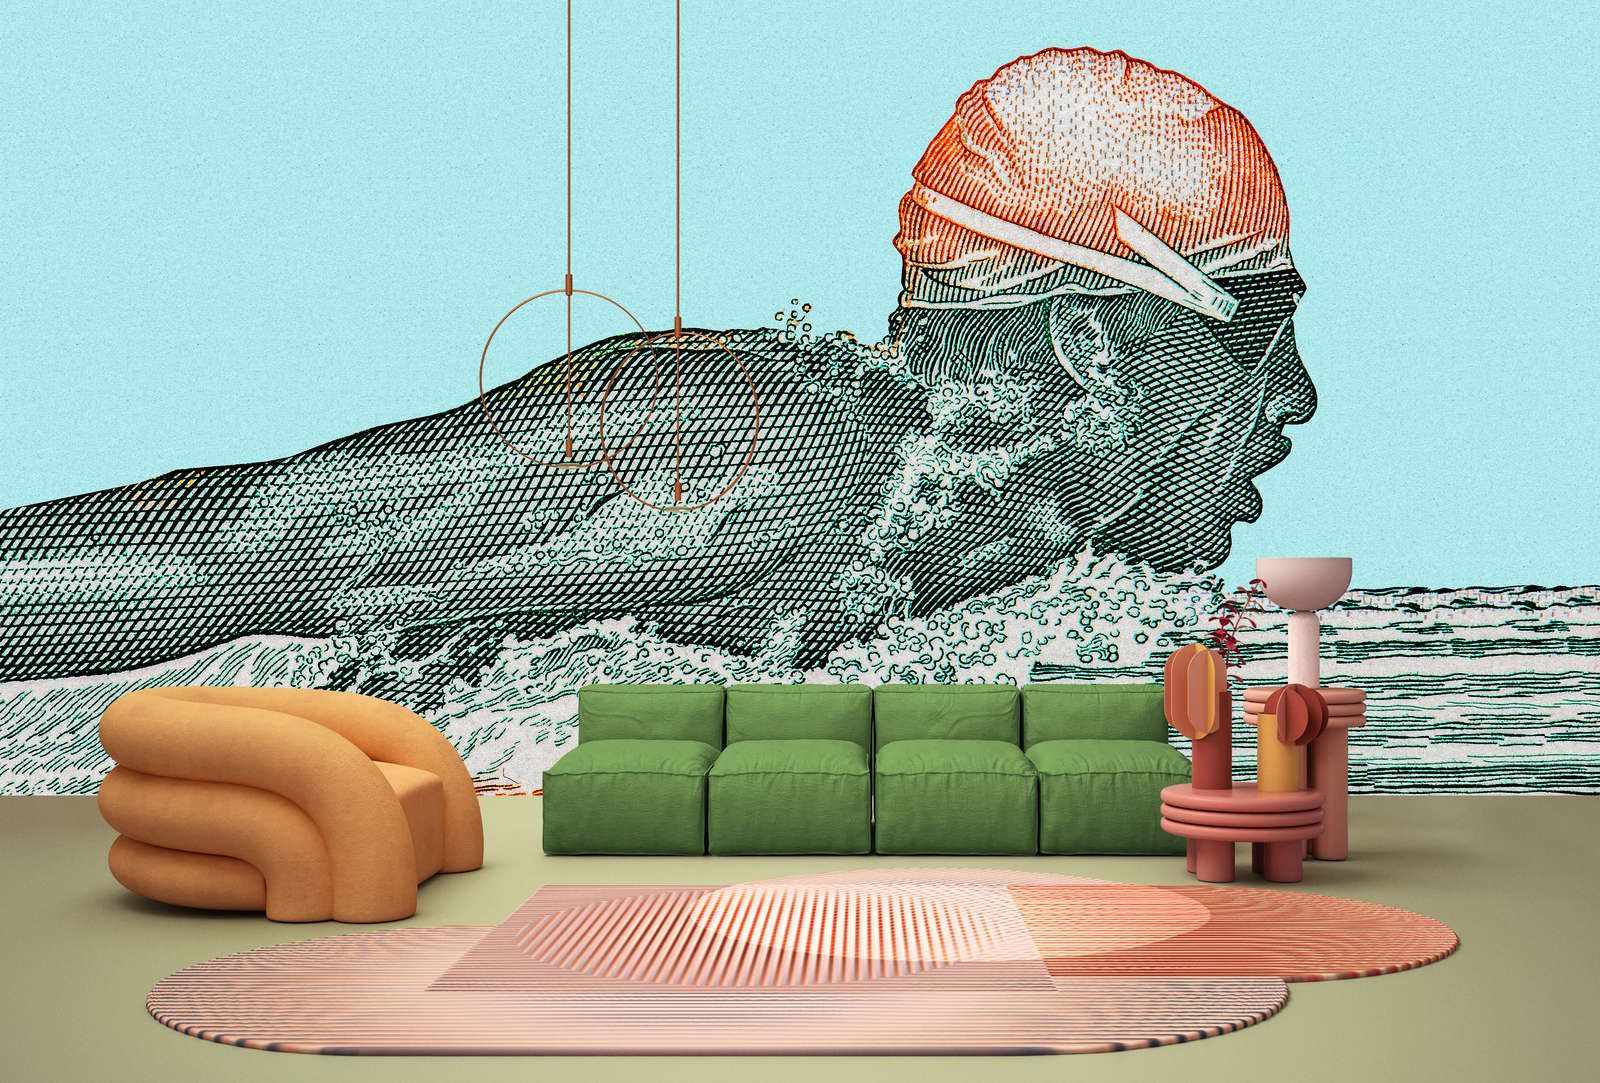             Digital behang »aquaman« - zwemmer in pixeldesign - petrol met kraftpapiertextuur | licht structuurvlies
        